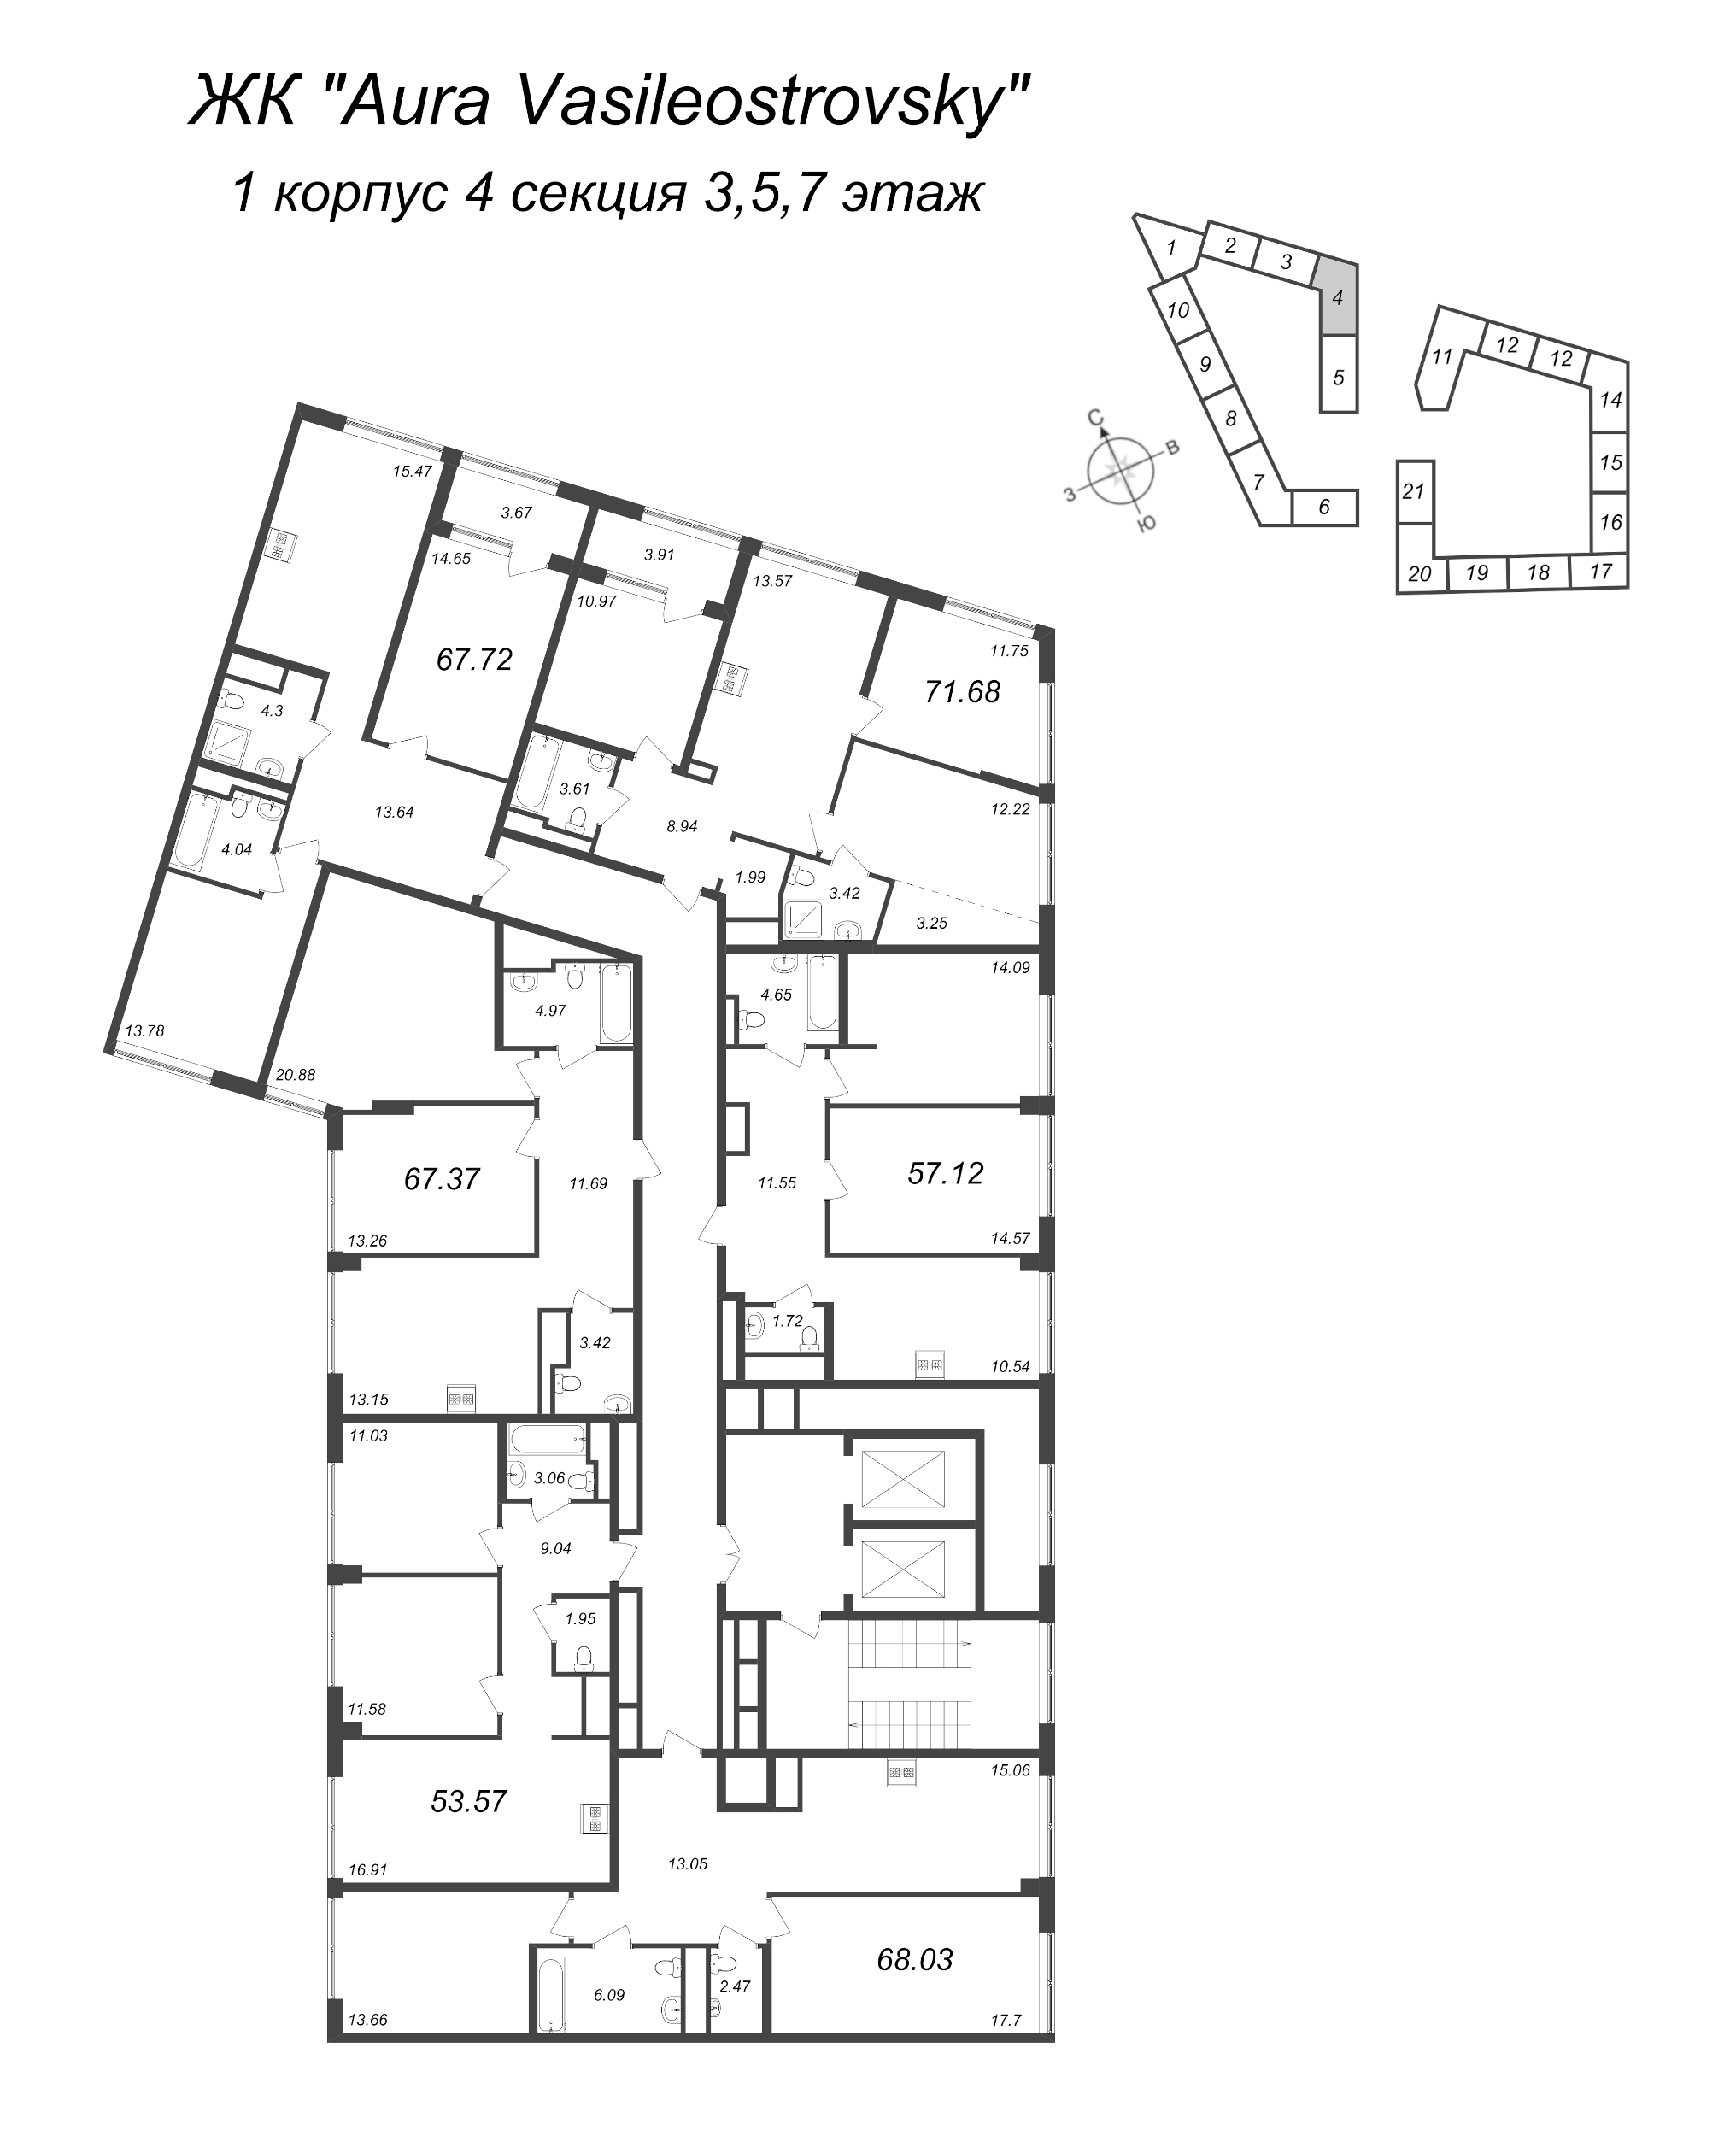 3-комнатная (Евро) квартира, 53.57 м² - планировка этажа